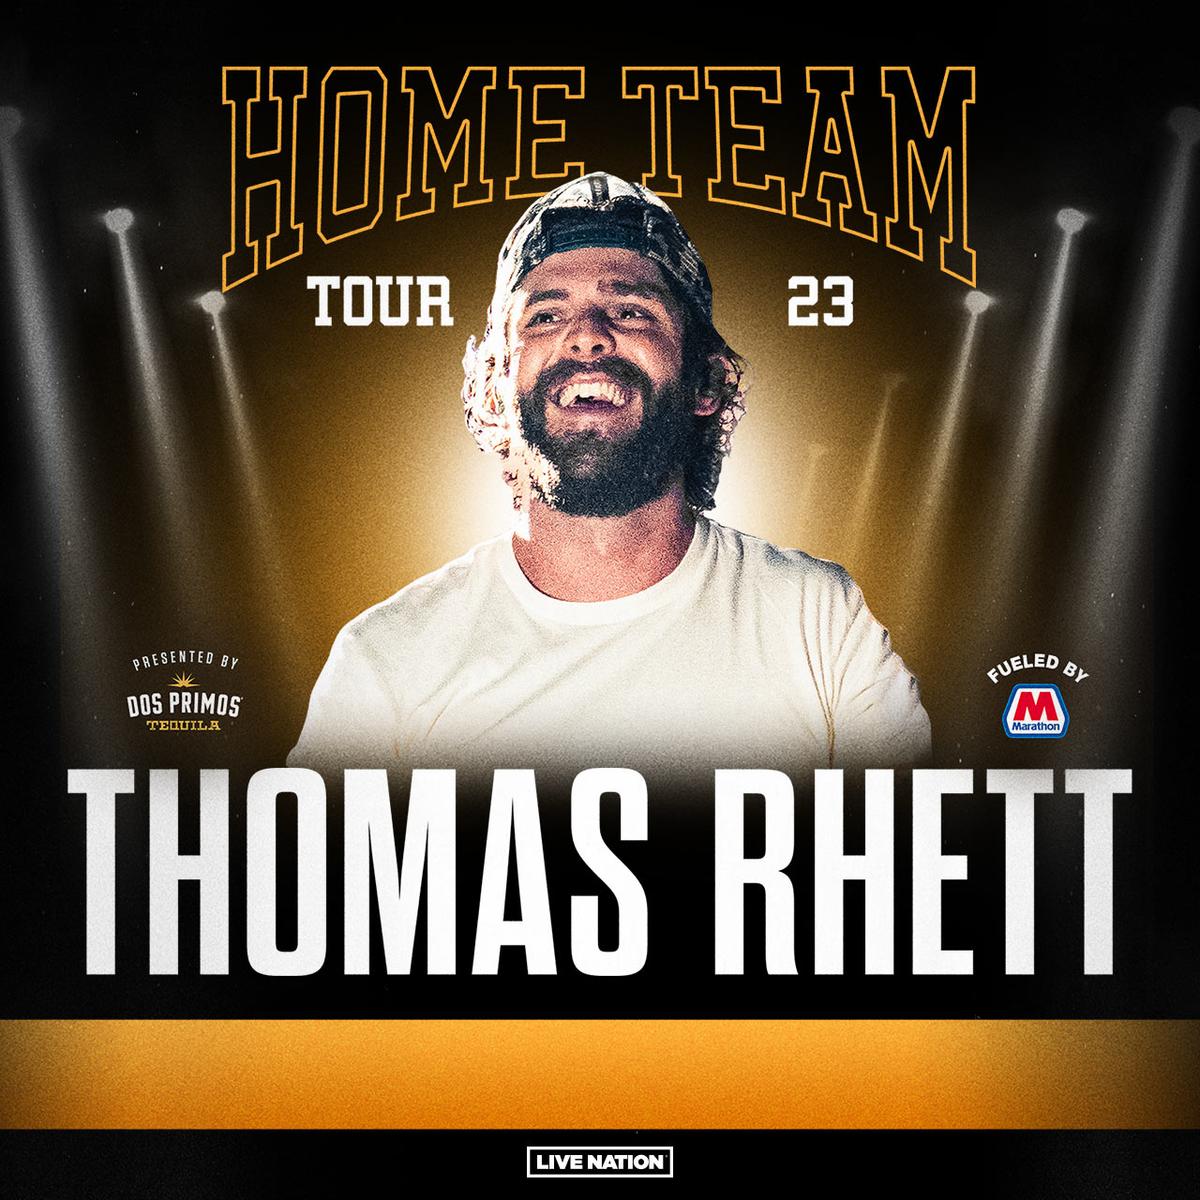 Thomas Rhett Concert Weekend in Kansas City